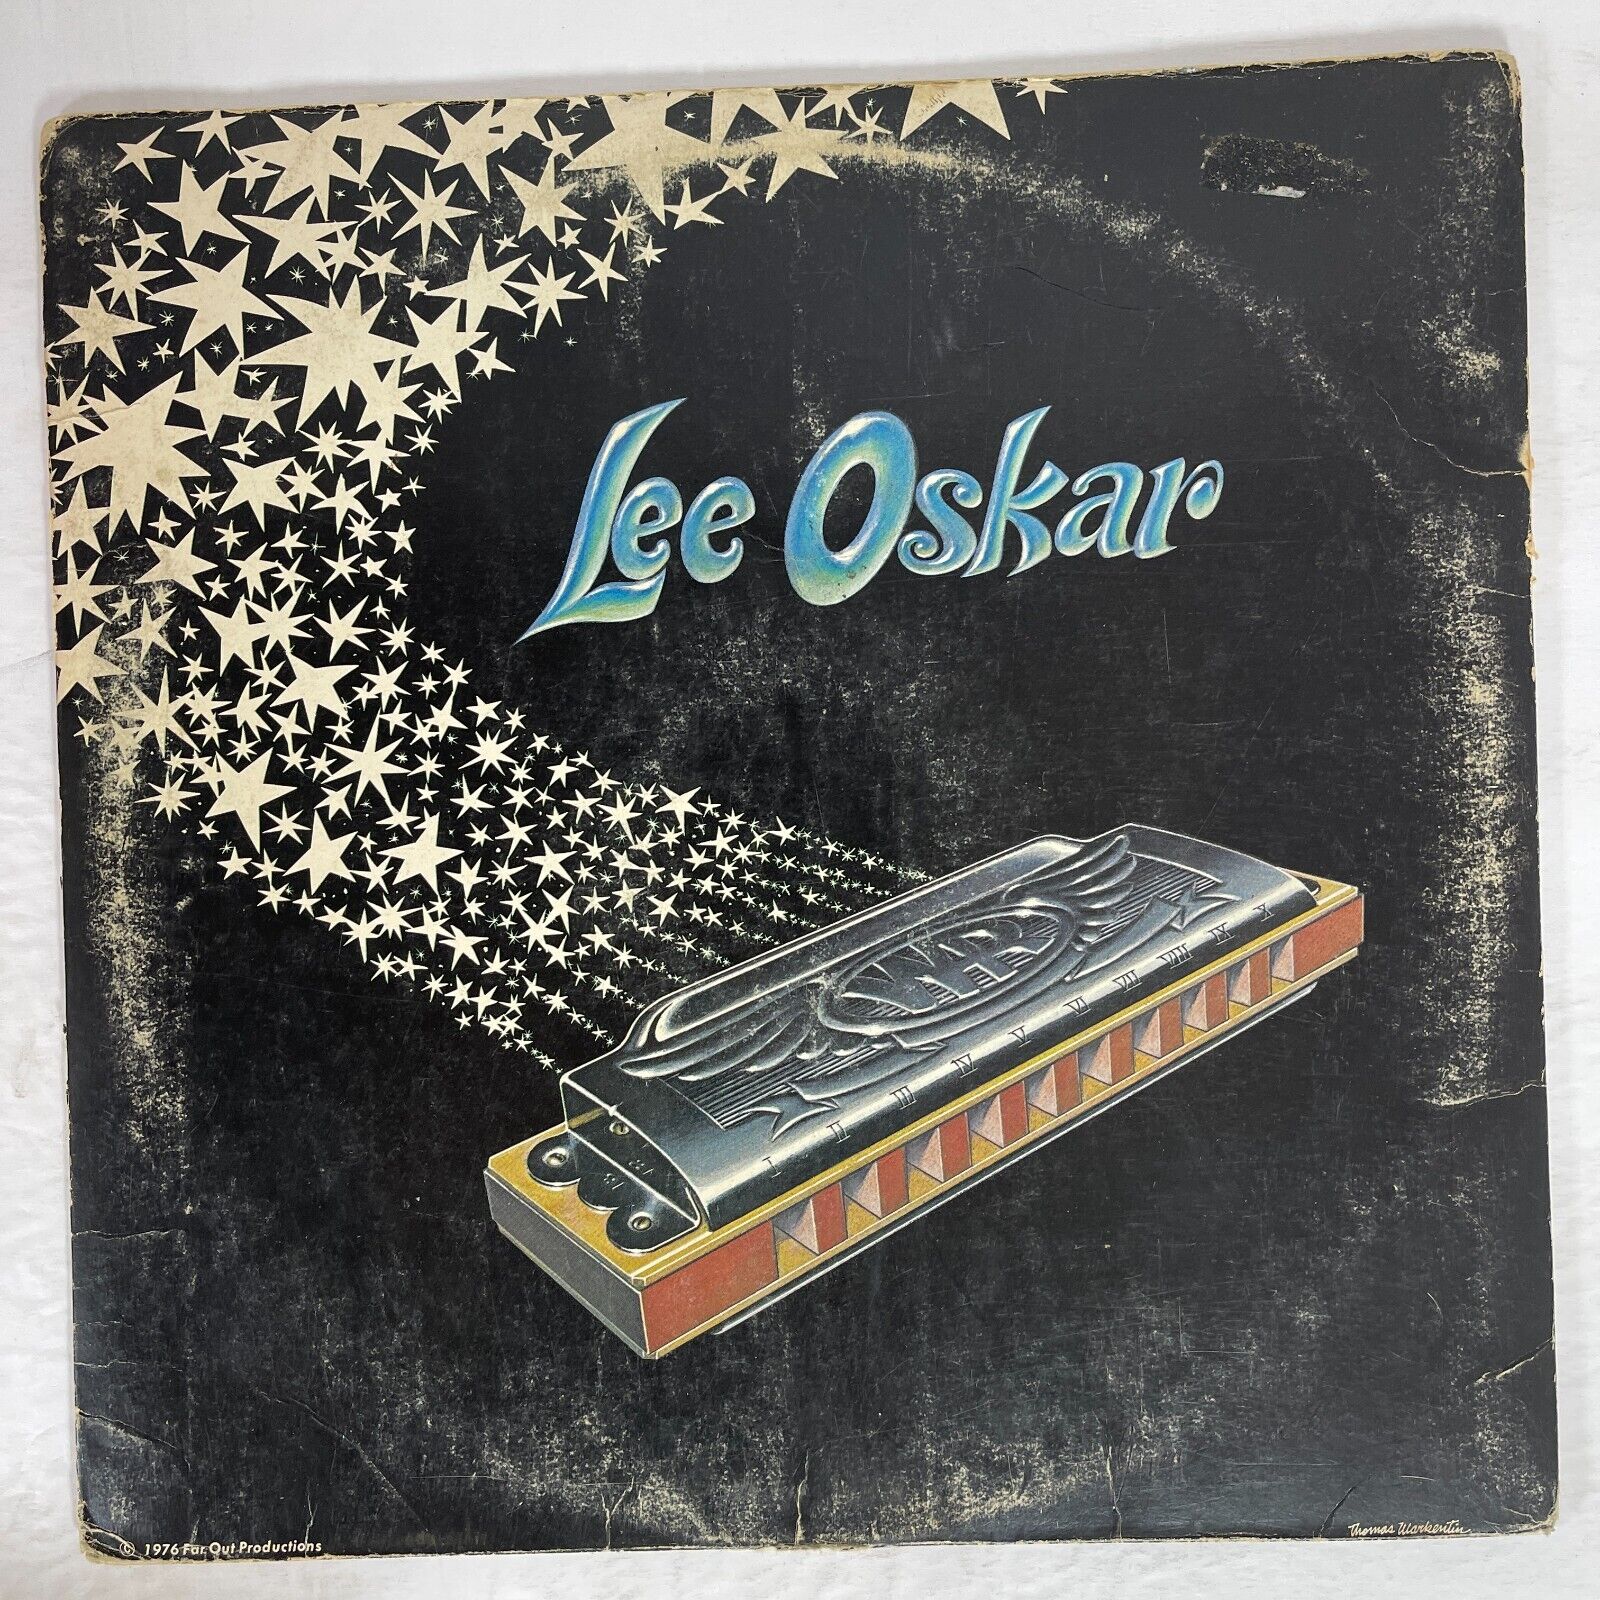 Lee Oskar – Lee Oskar Vinyl, LP 1976 United Artists Records – UA-LA594-G